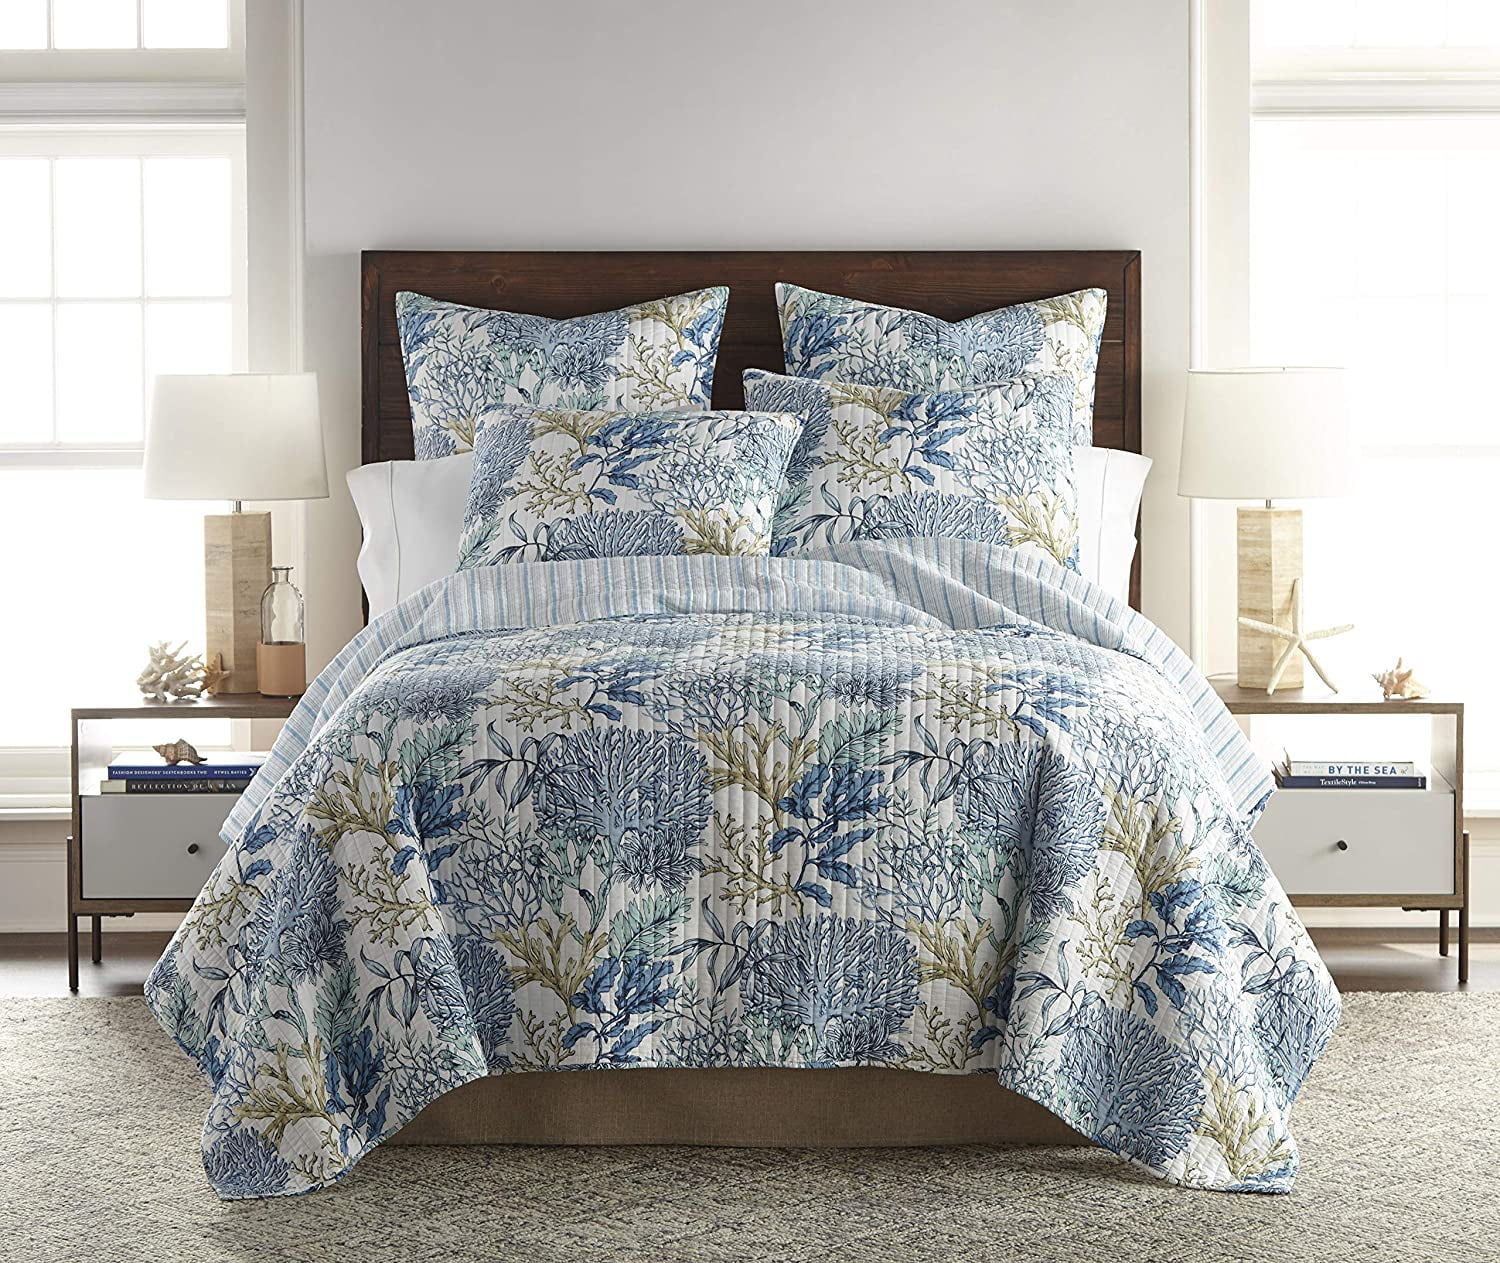 One Standard Pillow Sham Quilt Size Reversible Twin/Twin XL Quilt Levtex Home Blue Maui Quilt Set 68 x 86 Sham Size Striped Coastal Design in Light Blue Cotton 26 x 20 Cream and Tan 